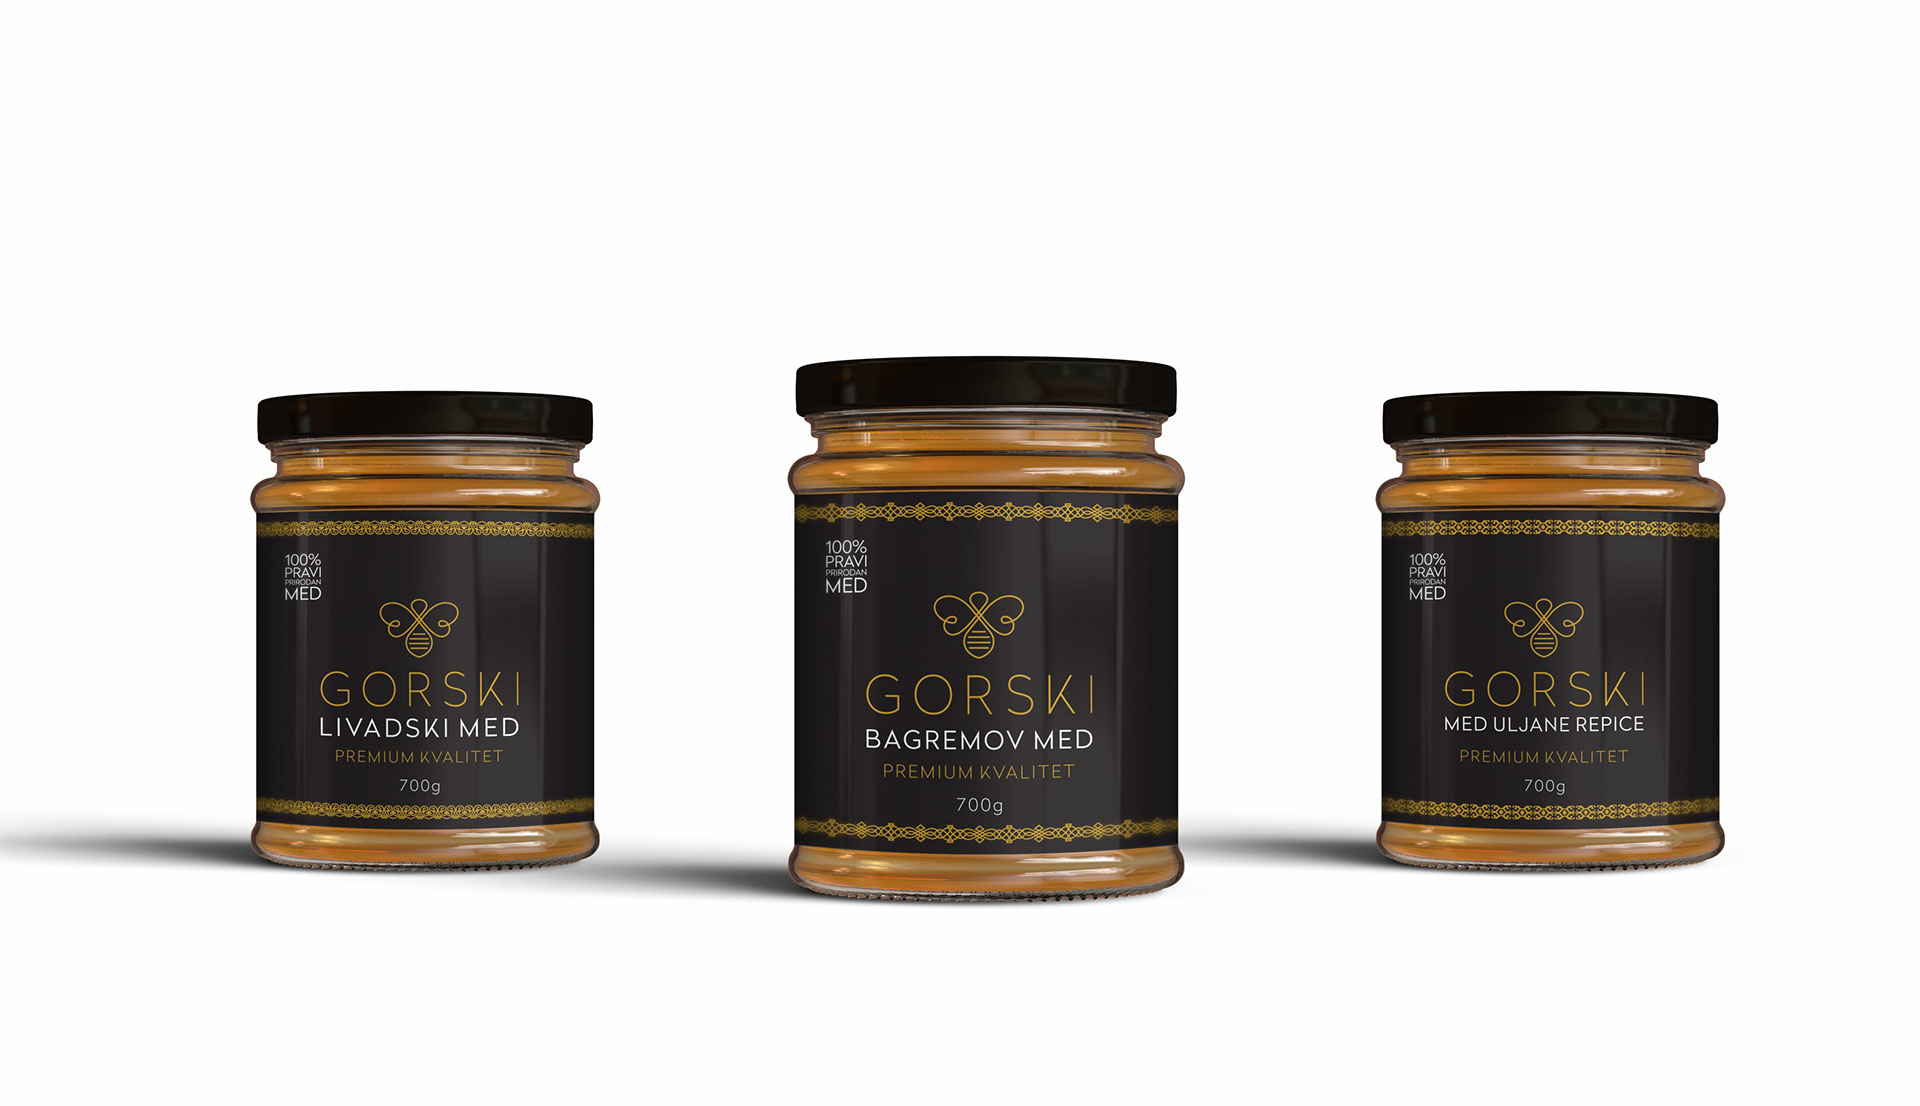   GORSKI蜂蜜三种类型